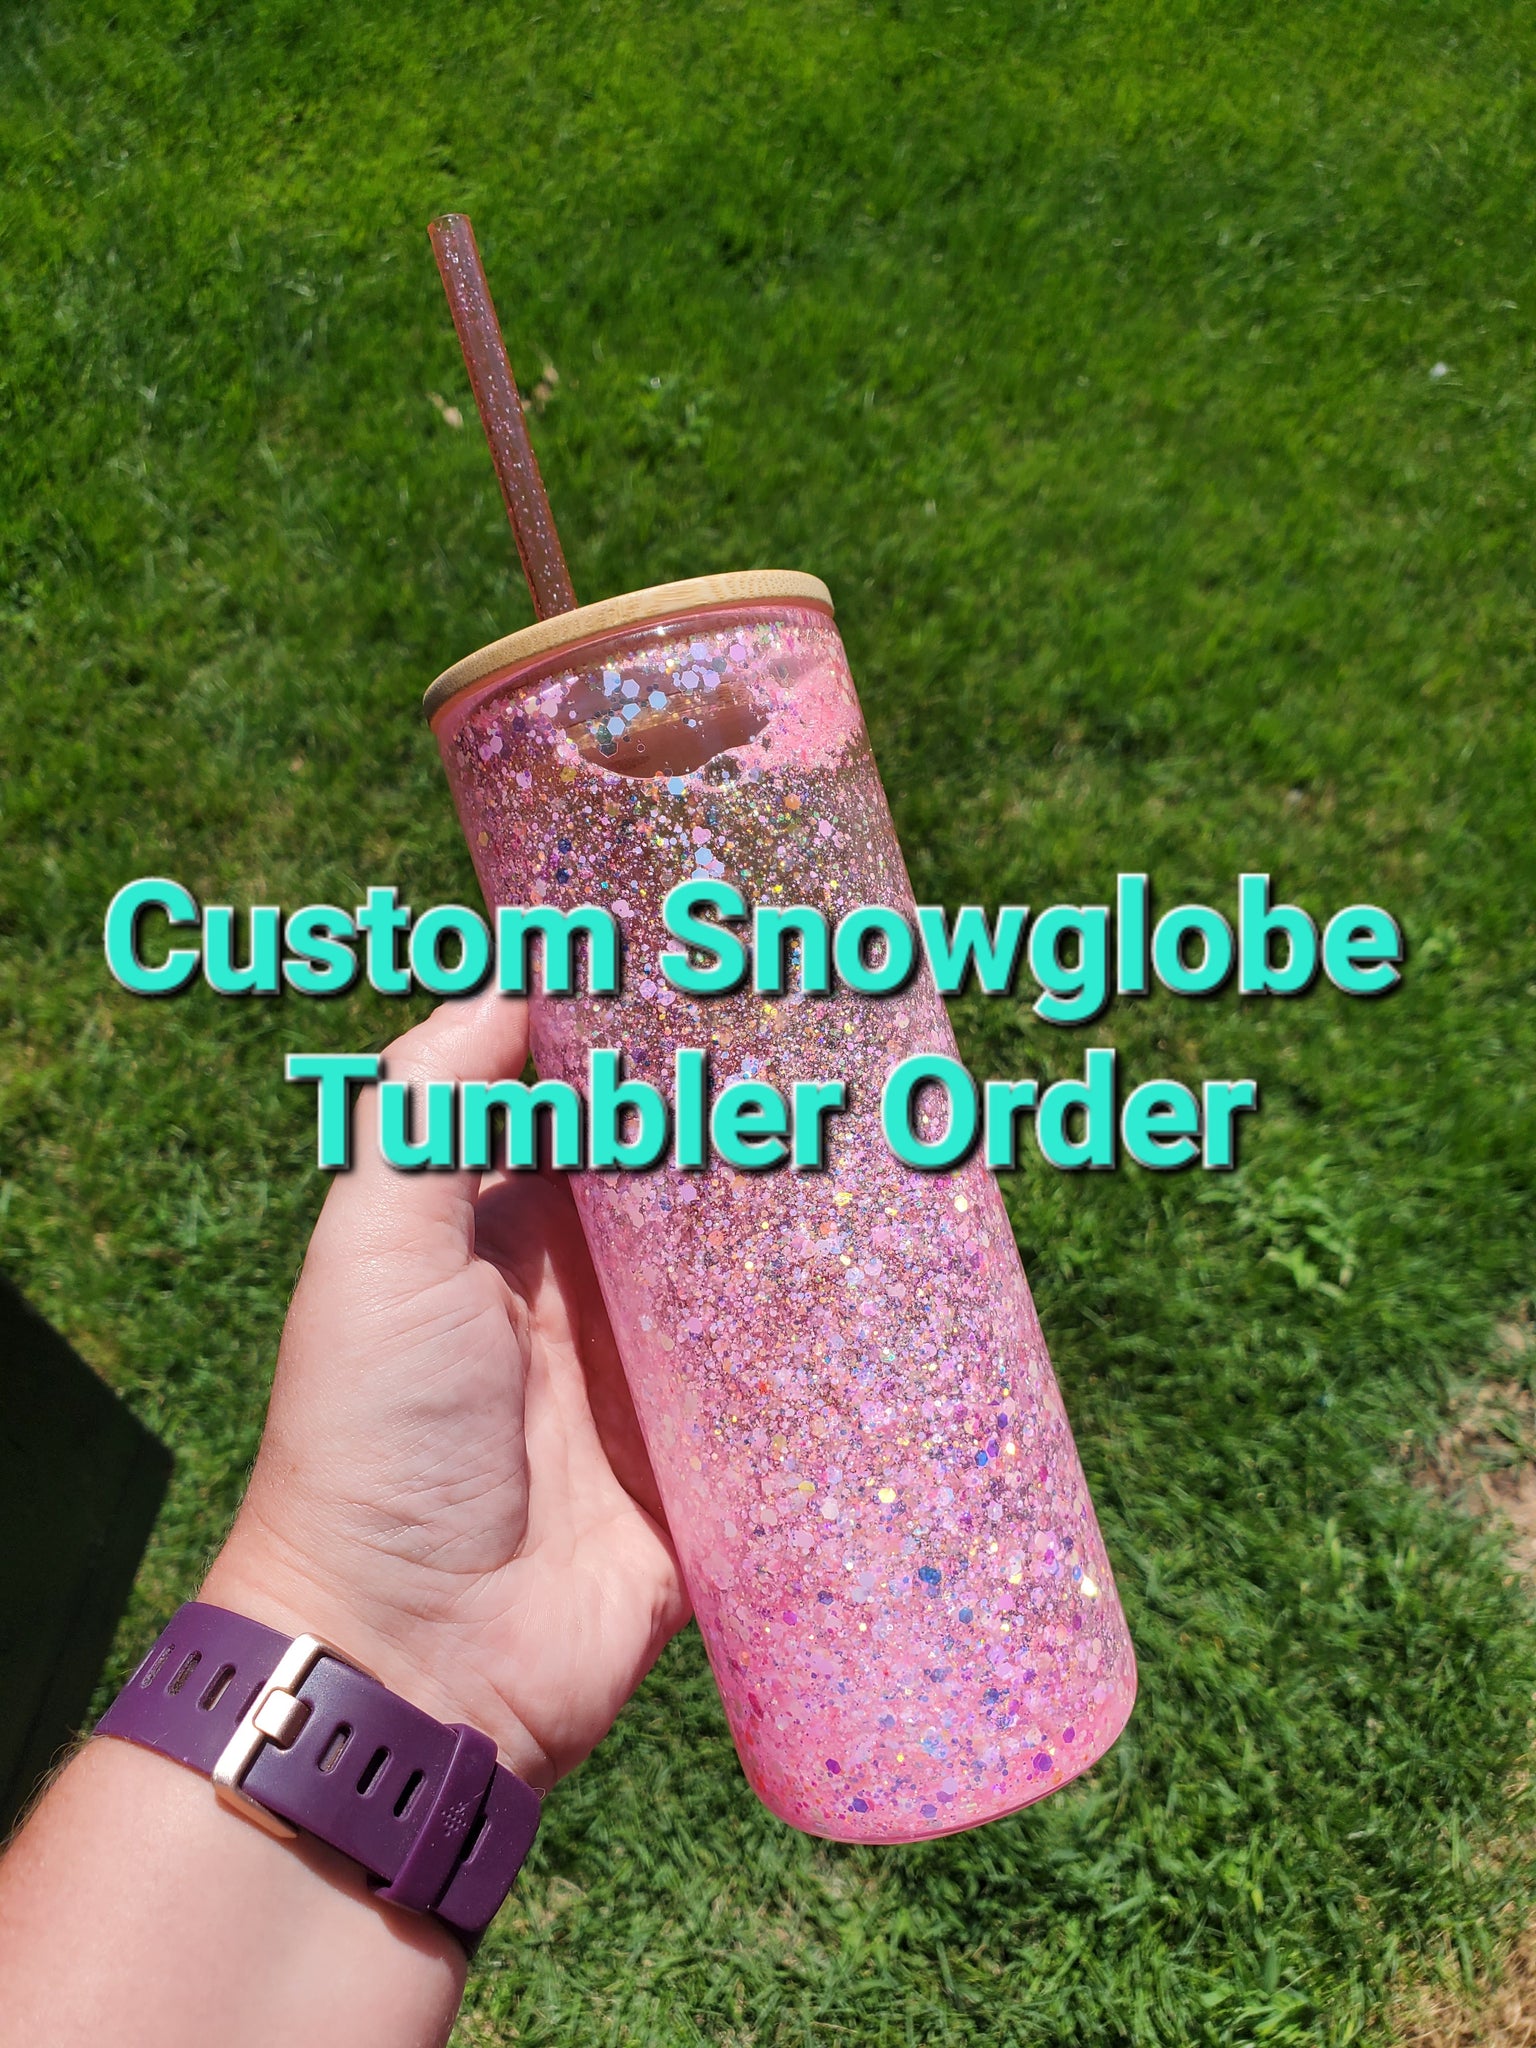 50 Snowglobe tumbler ideas  tumbler cups diy, custom tumblers, tumbler